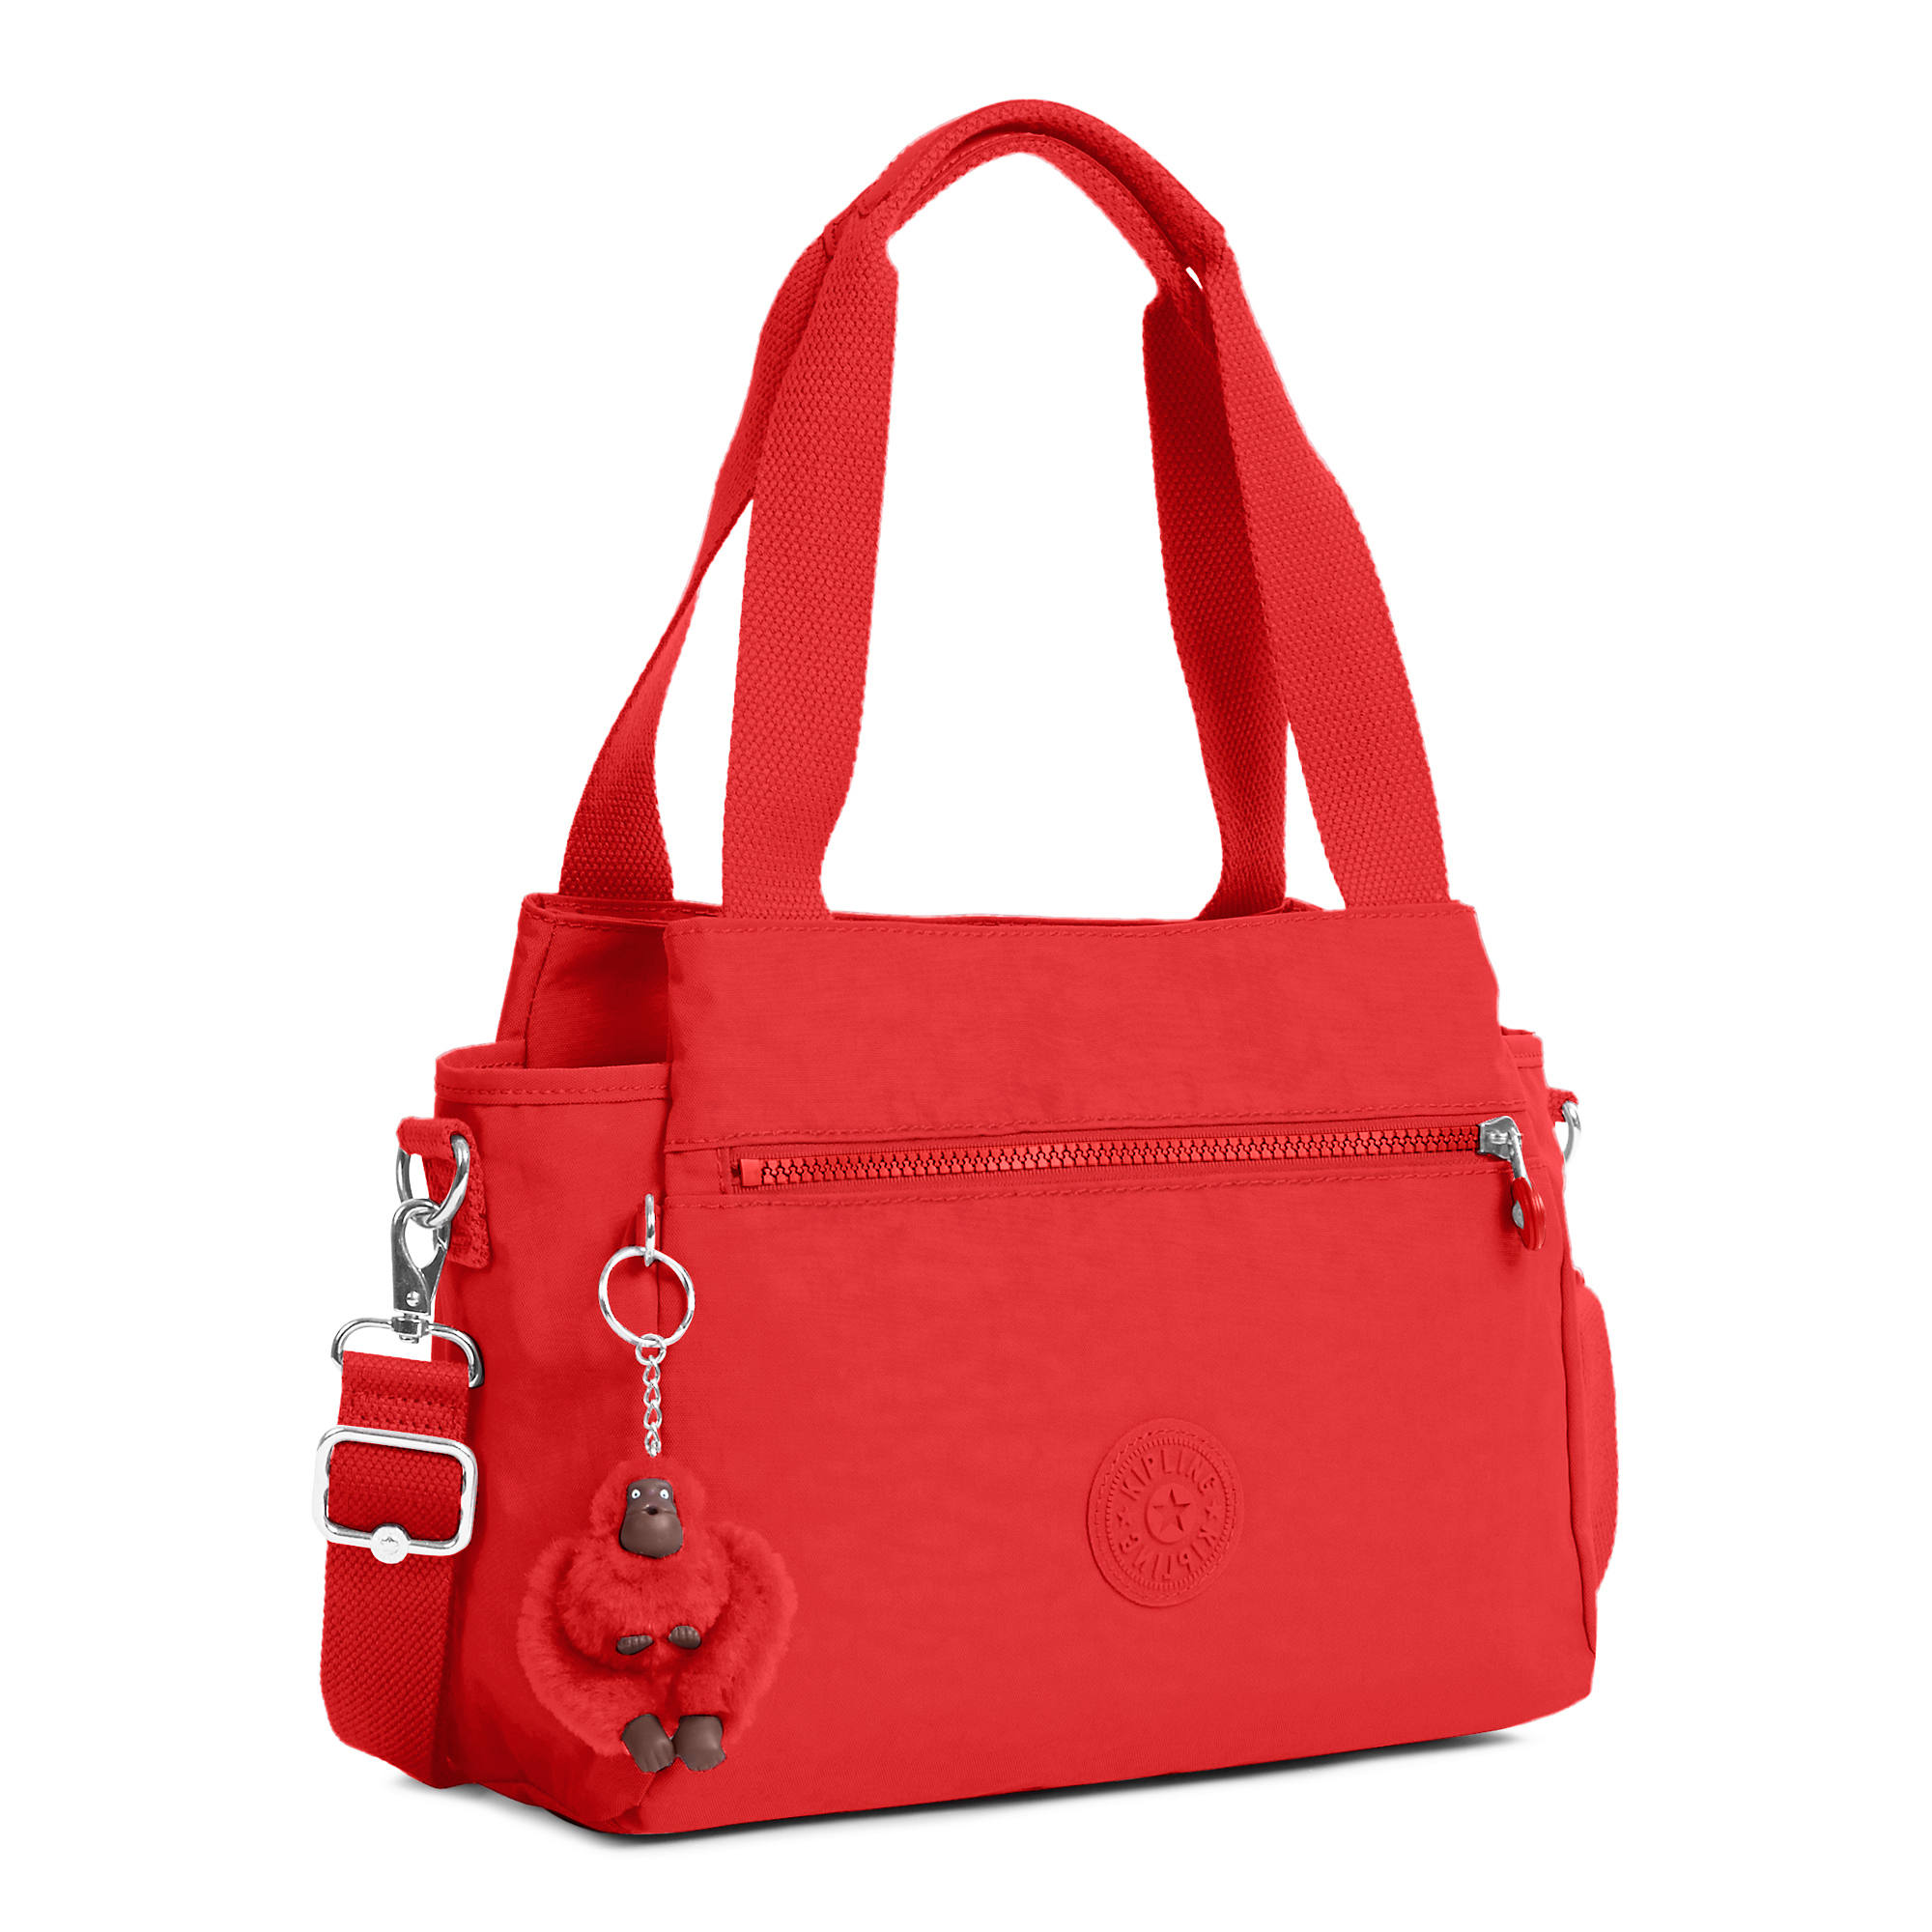 Kipling Elysia Handbag | eBay